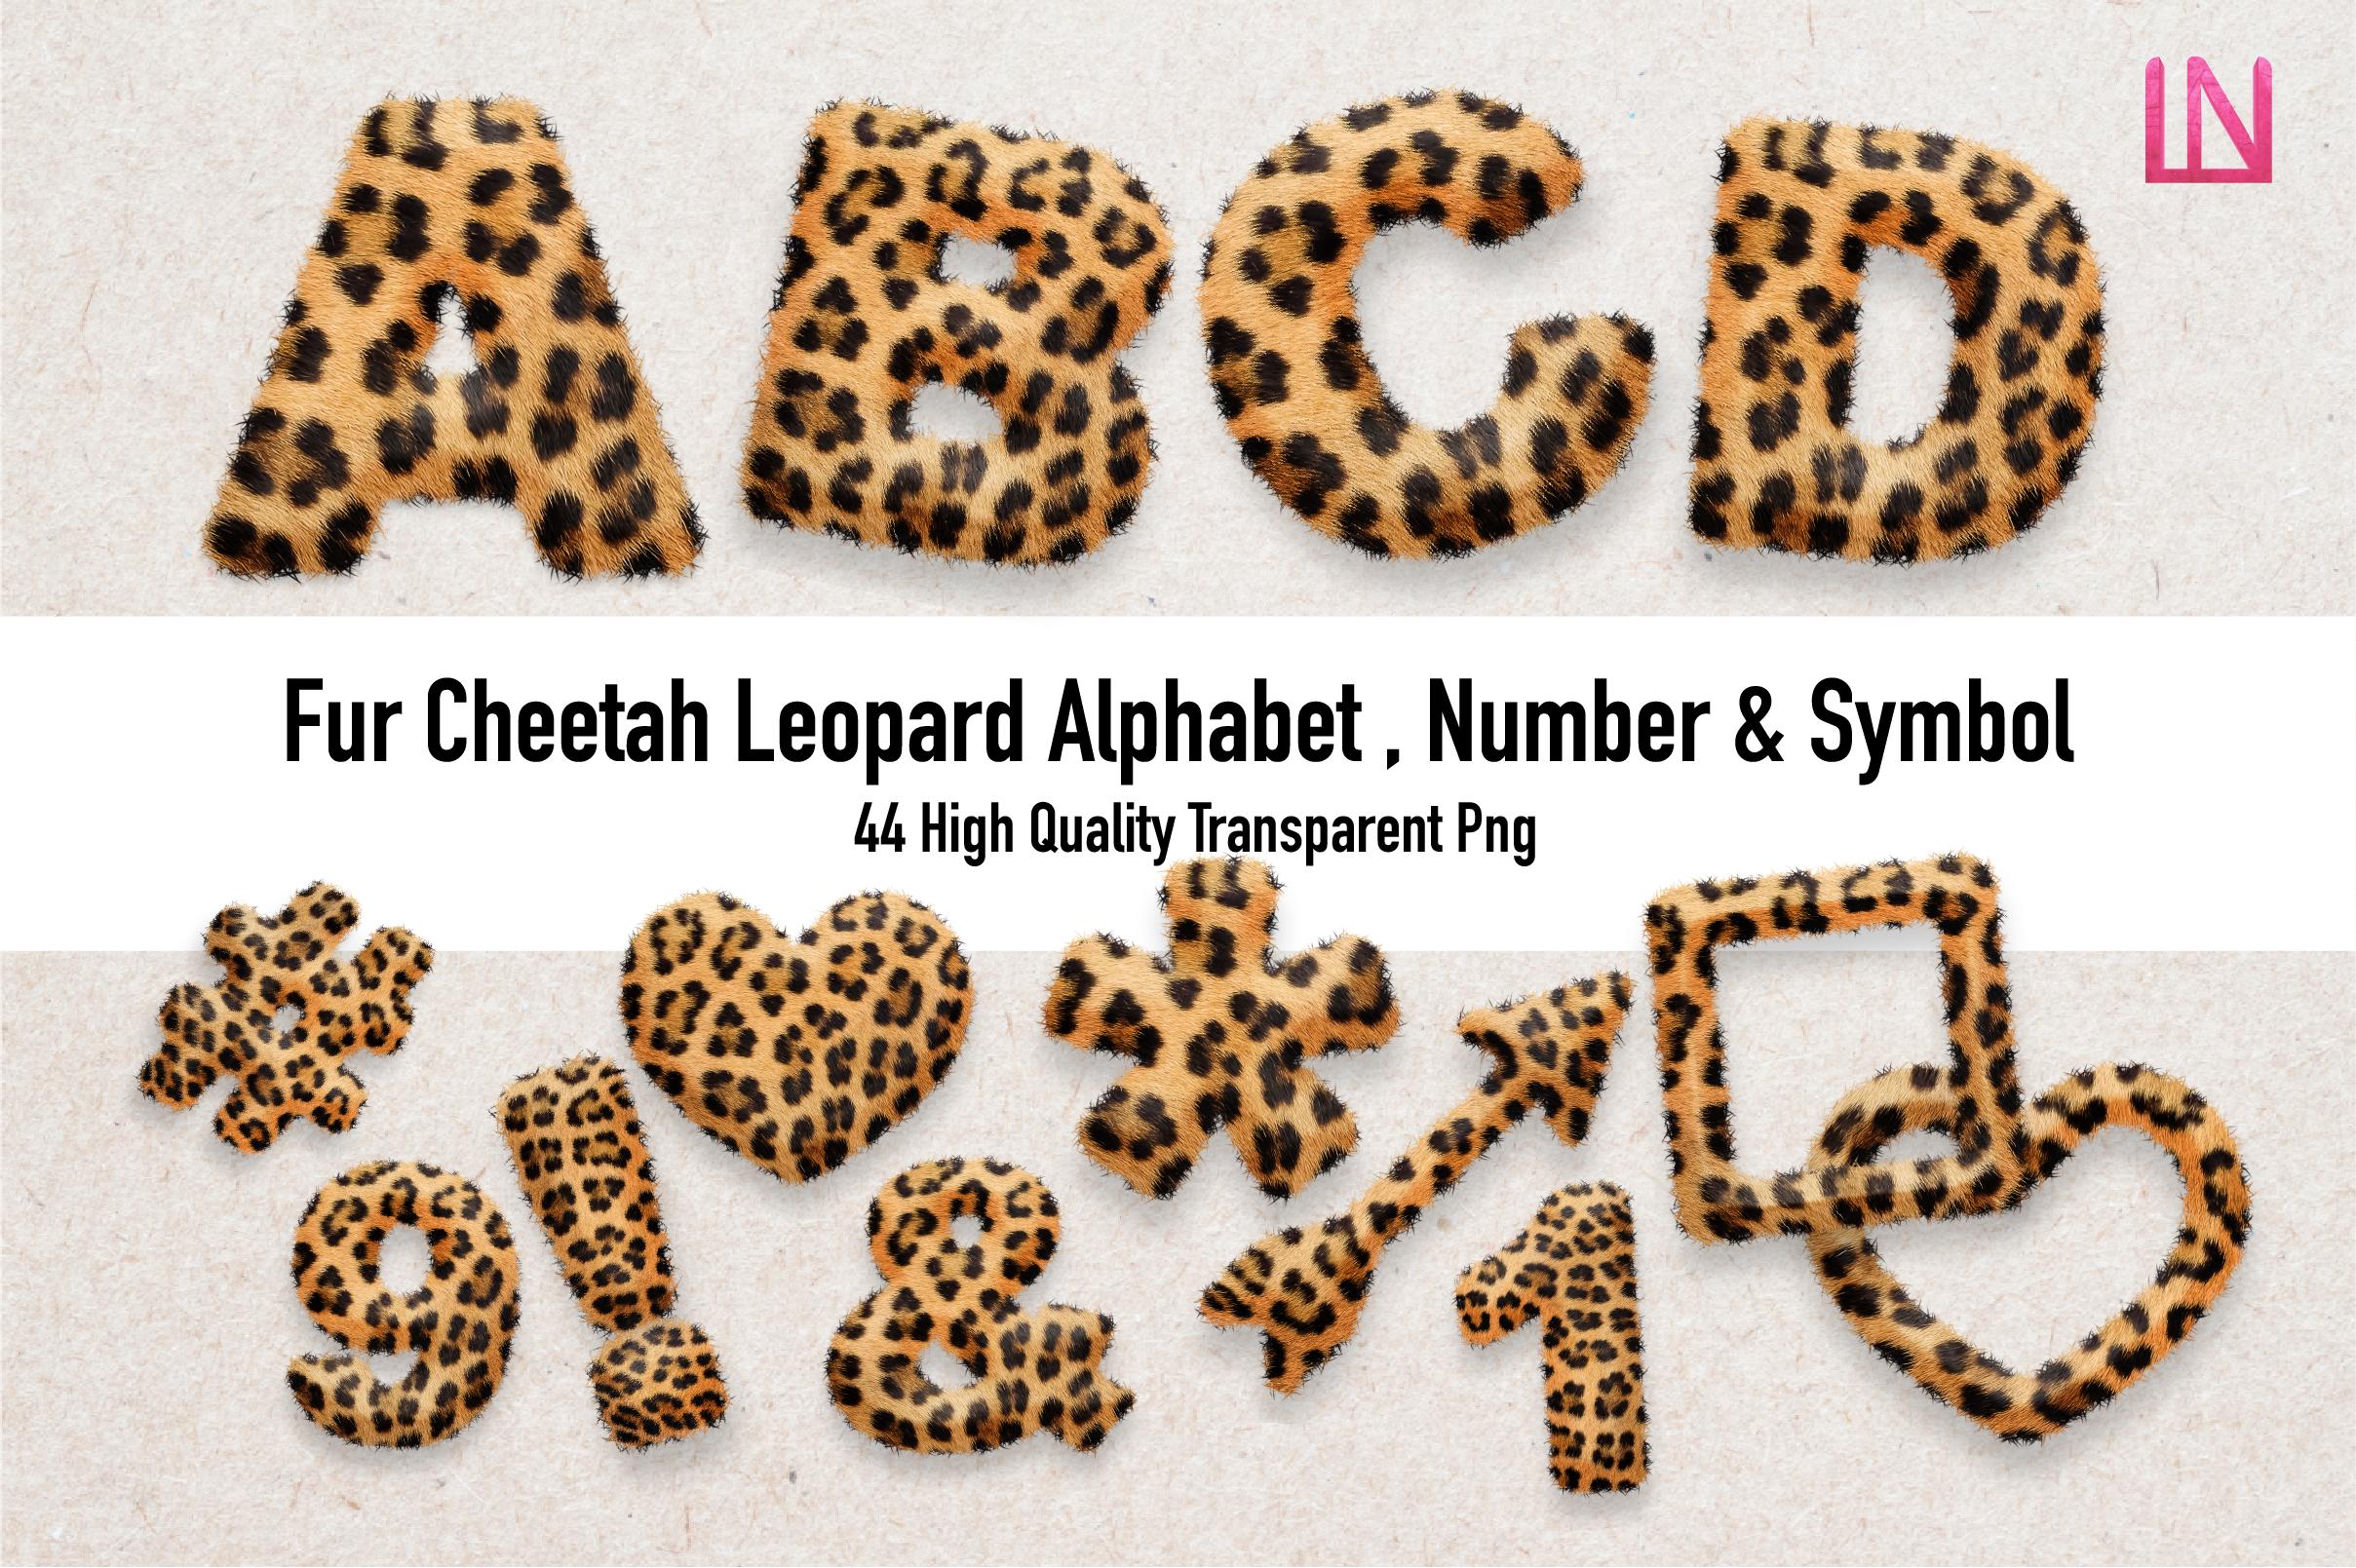 3D Fur Cheetah Leopard Alphabet & Number